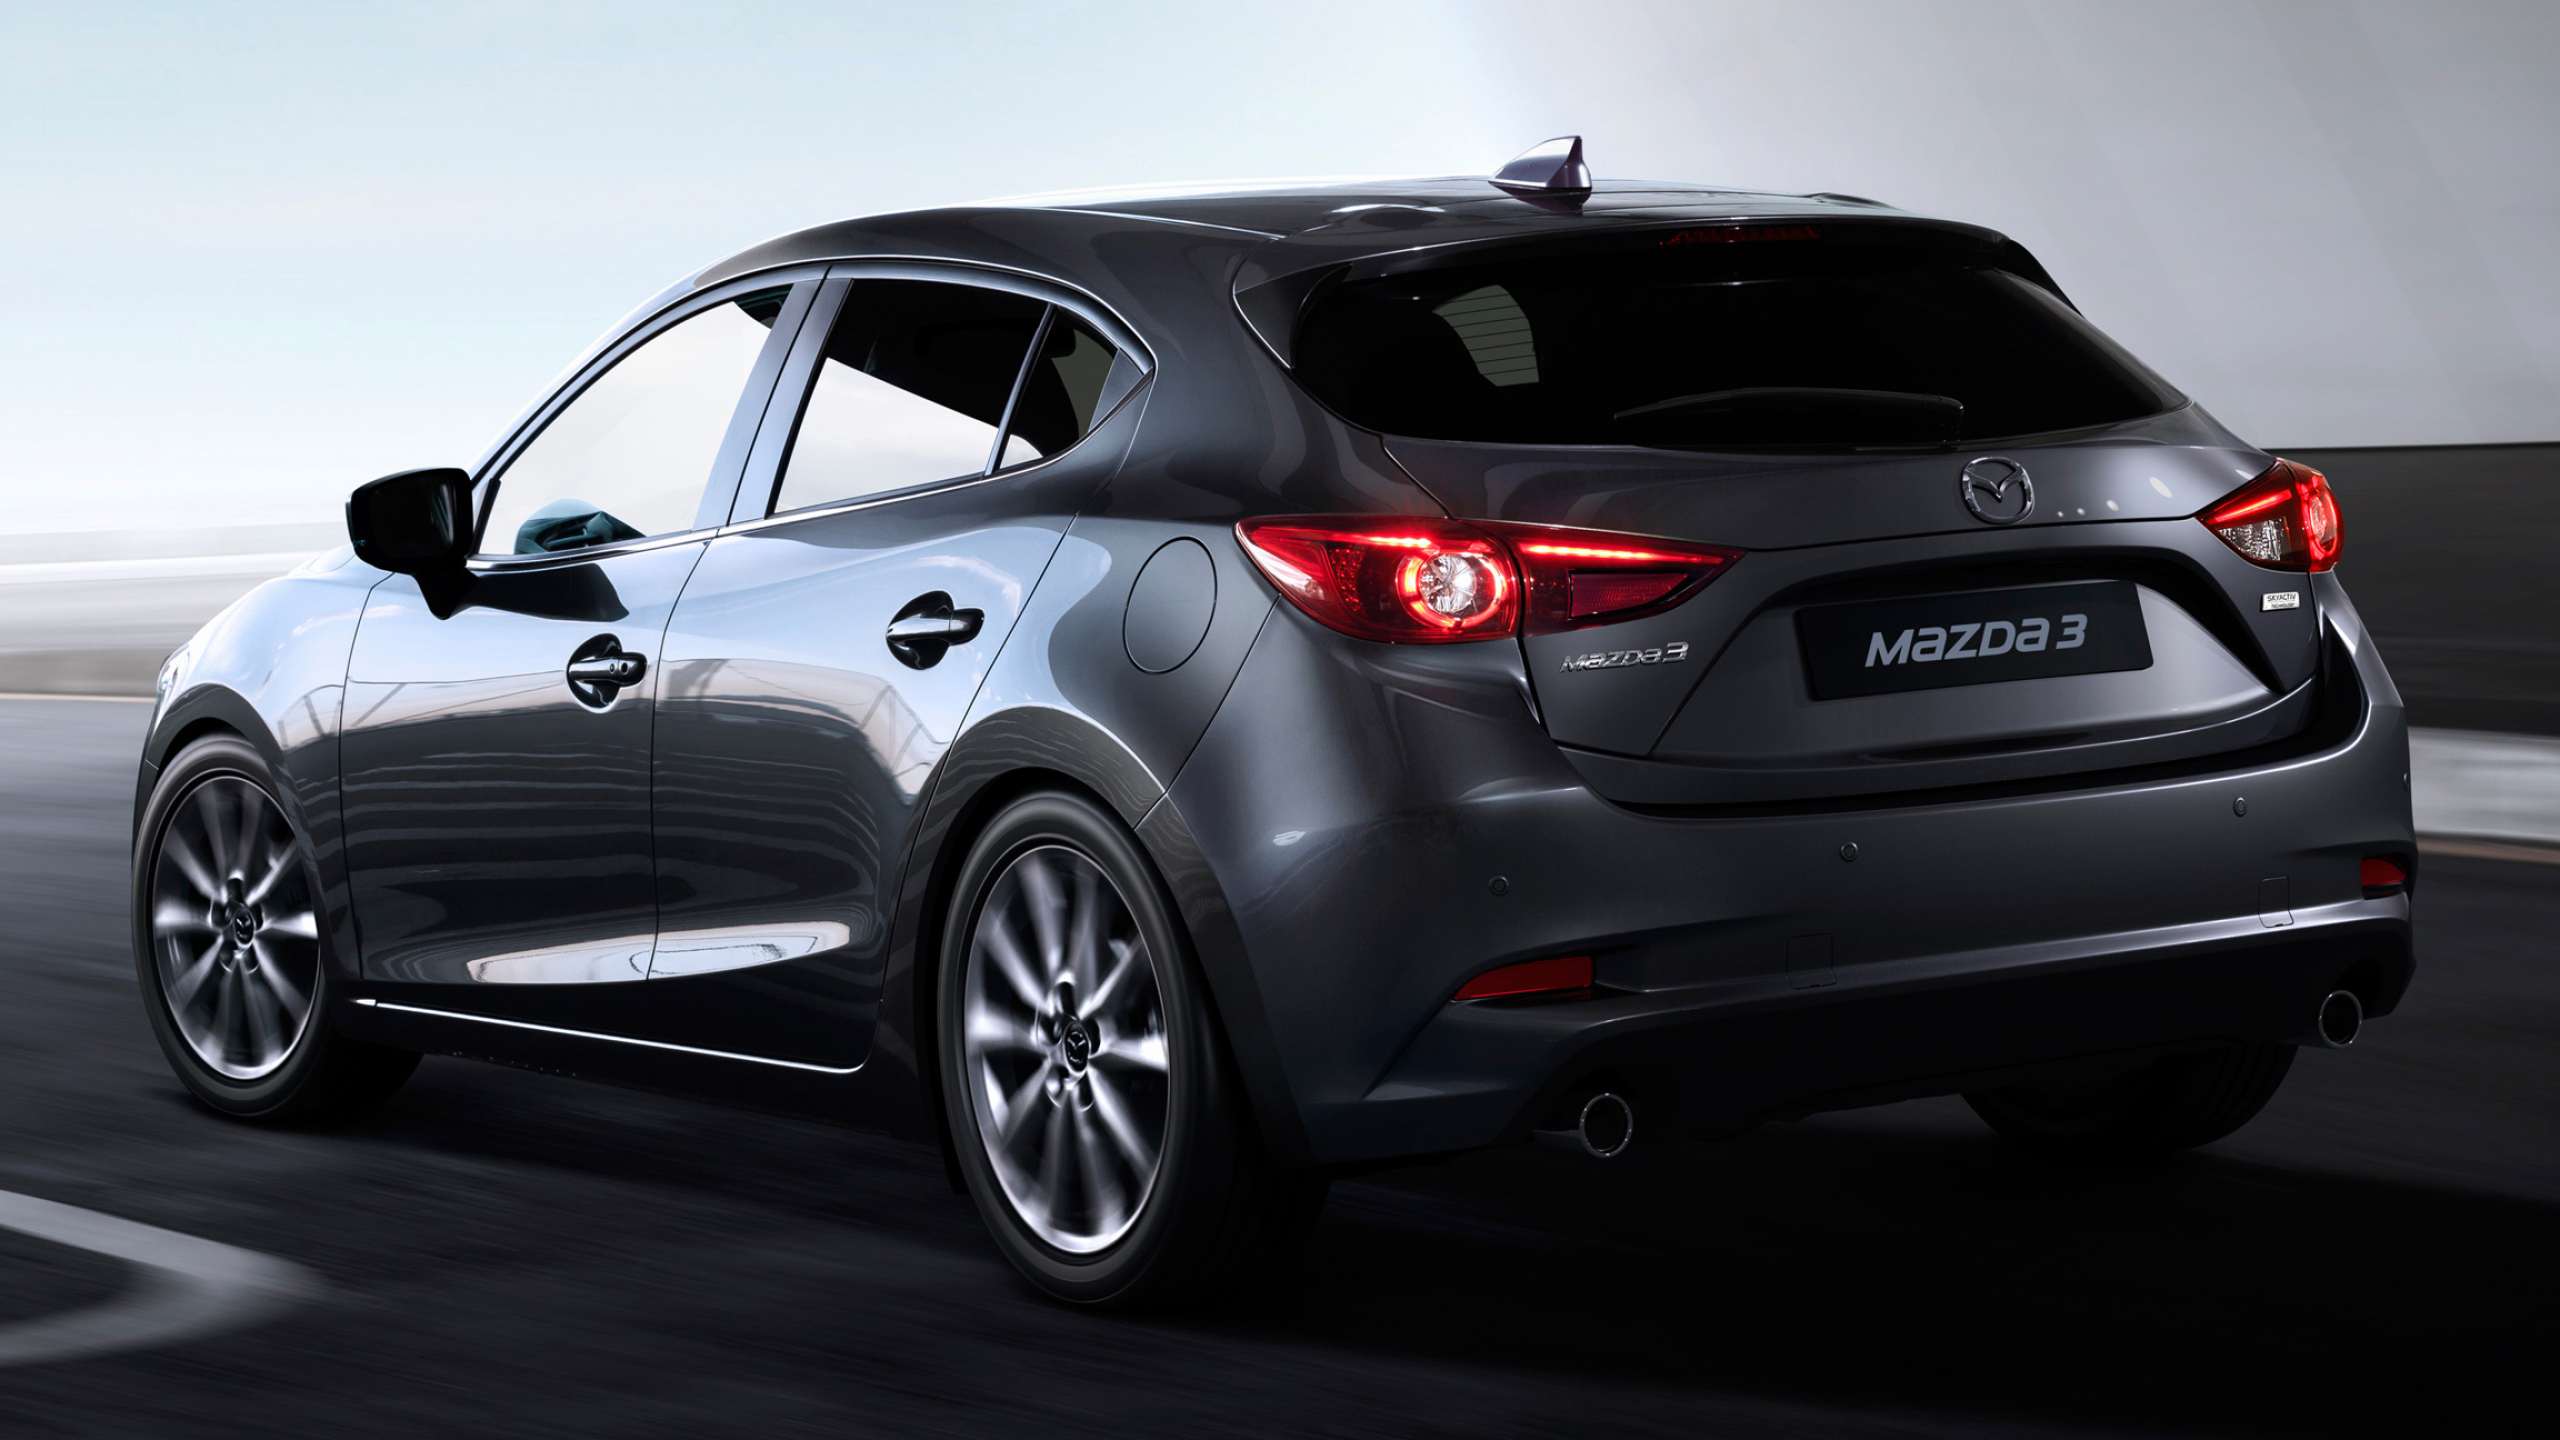 Аксела 2017 год. Mazda 3 Hatchback 2017. Mazda 3 2018 Hatchback. Мазда 3 хэтчбек 2018. Mazda 3 Hatchback 2016.